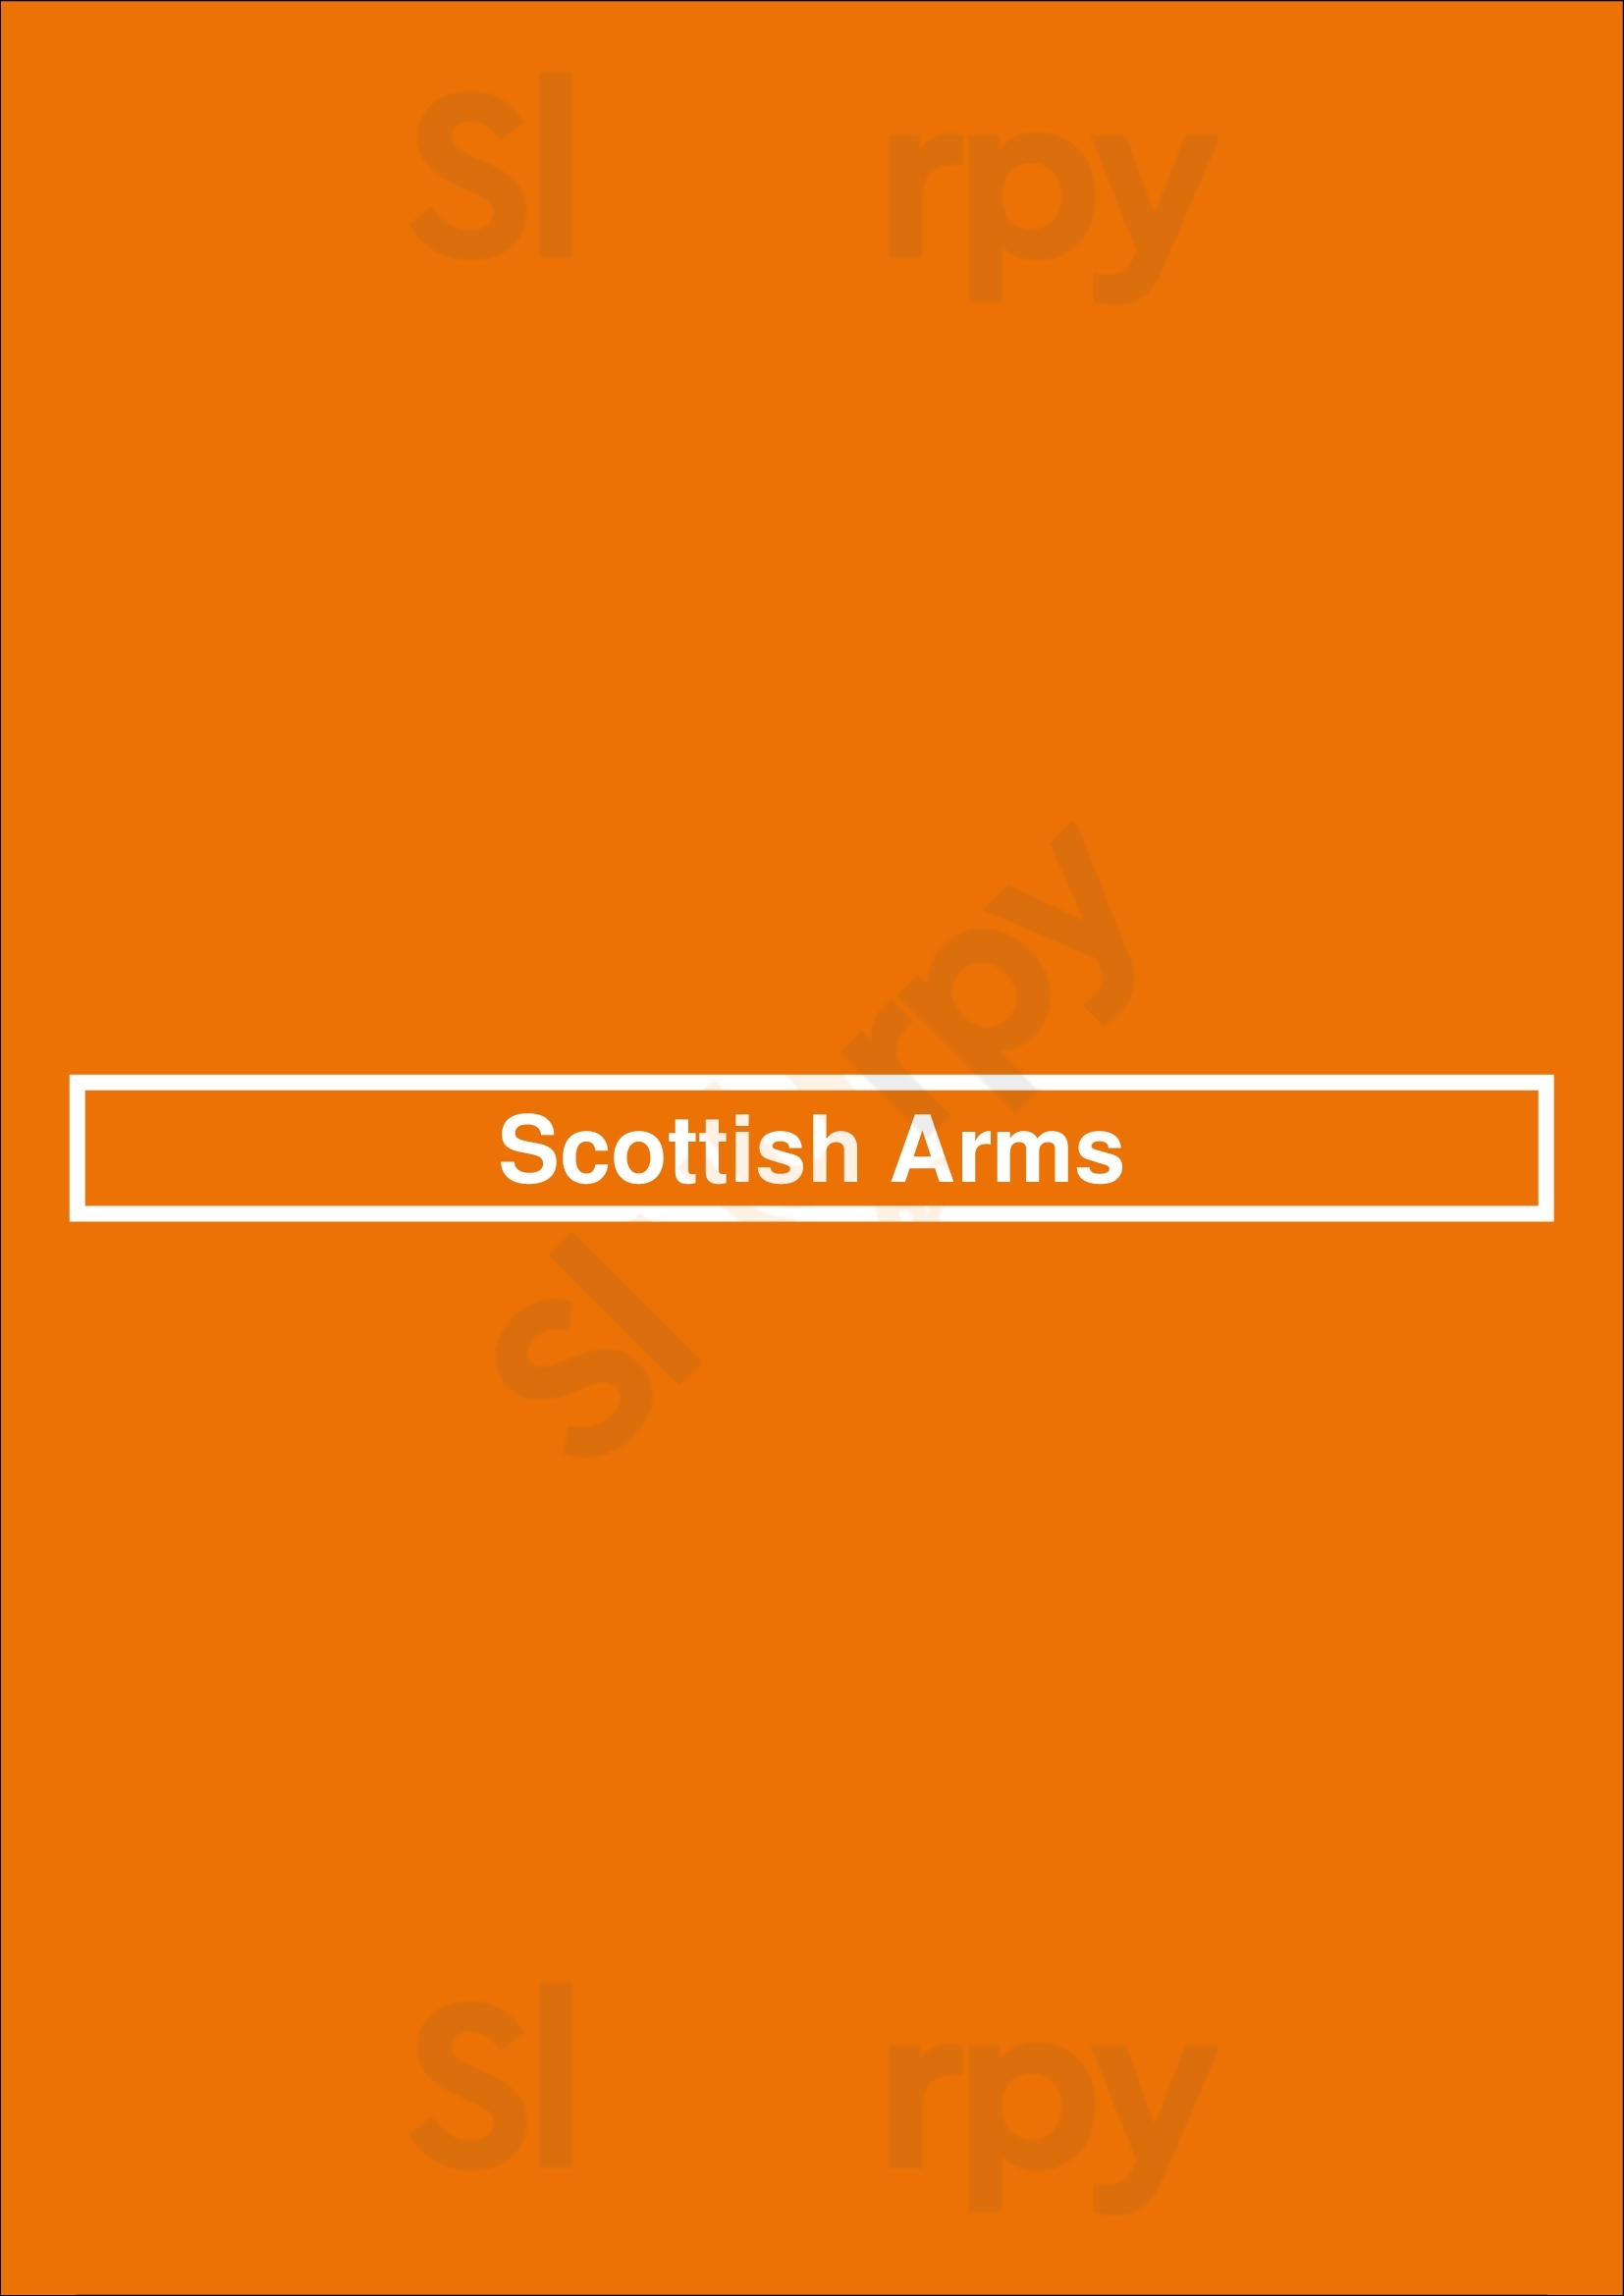 Scottish Arms Saint Louis Menu - 1